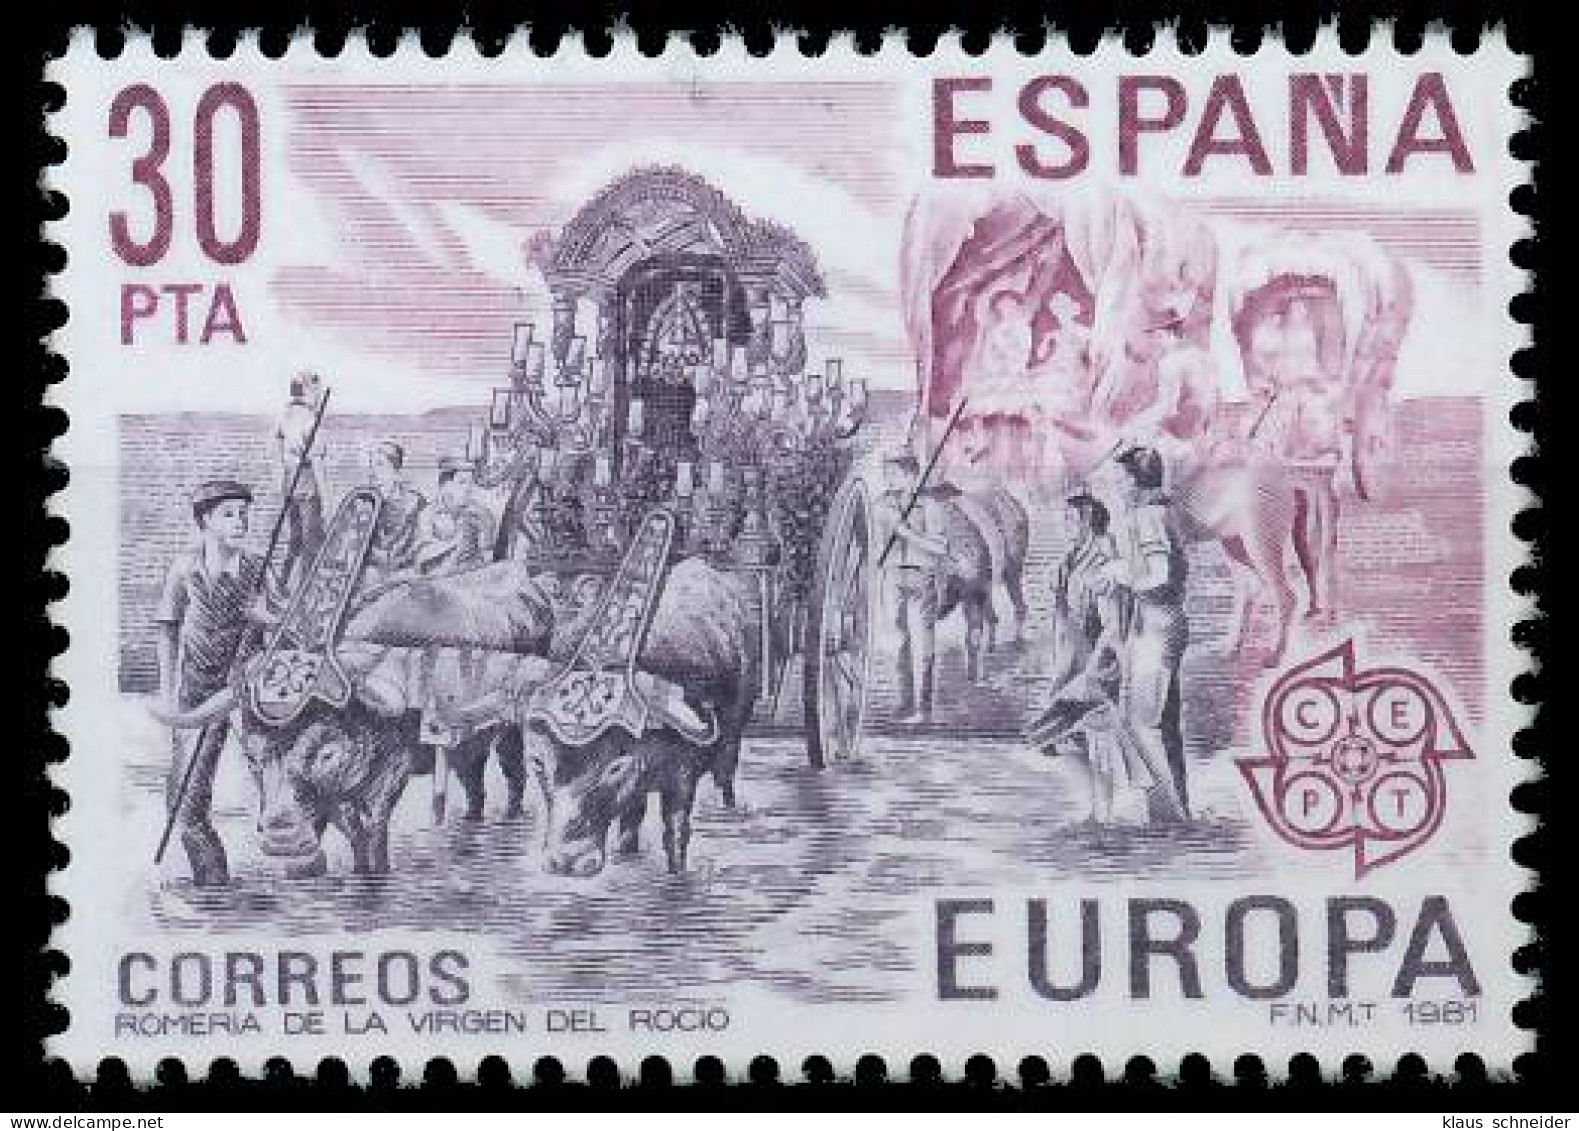 SPANIEN 1981 Nr 2499 Postfrisch S1D7BDE - Nuevos